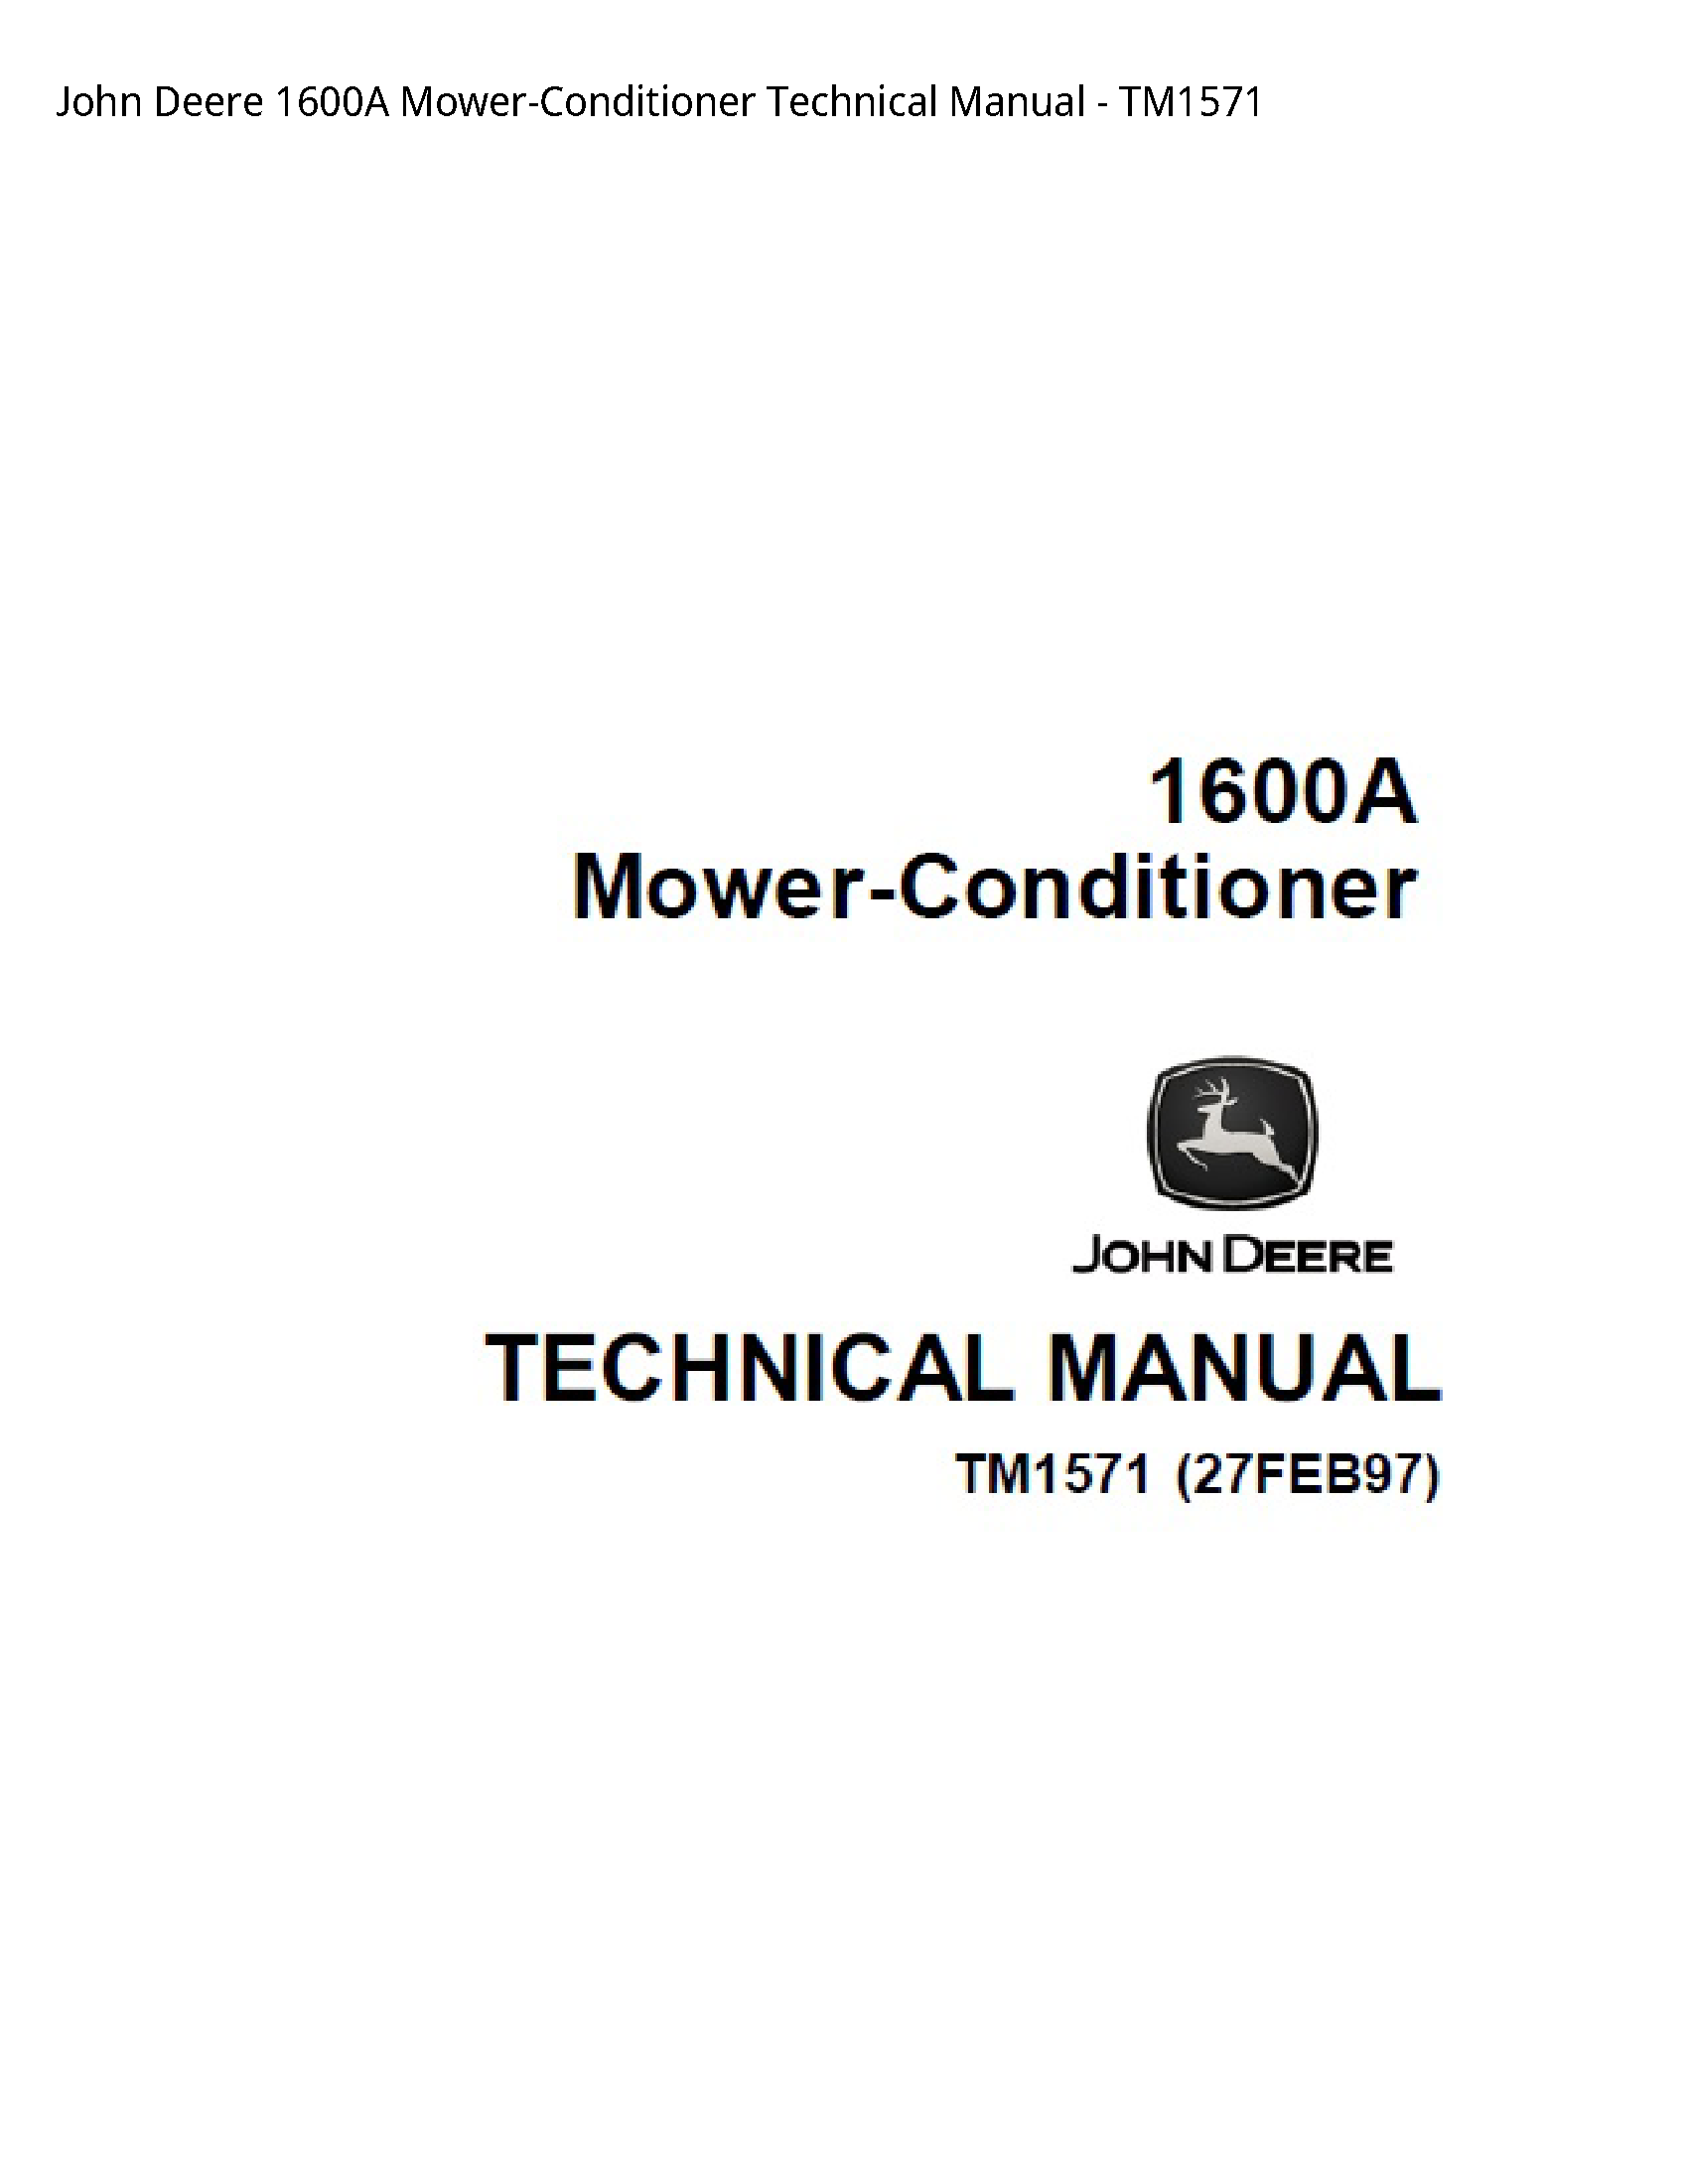 John Deere 1600A Mower-Conditioner Technical Manual - TM1571